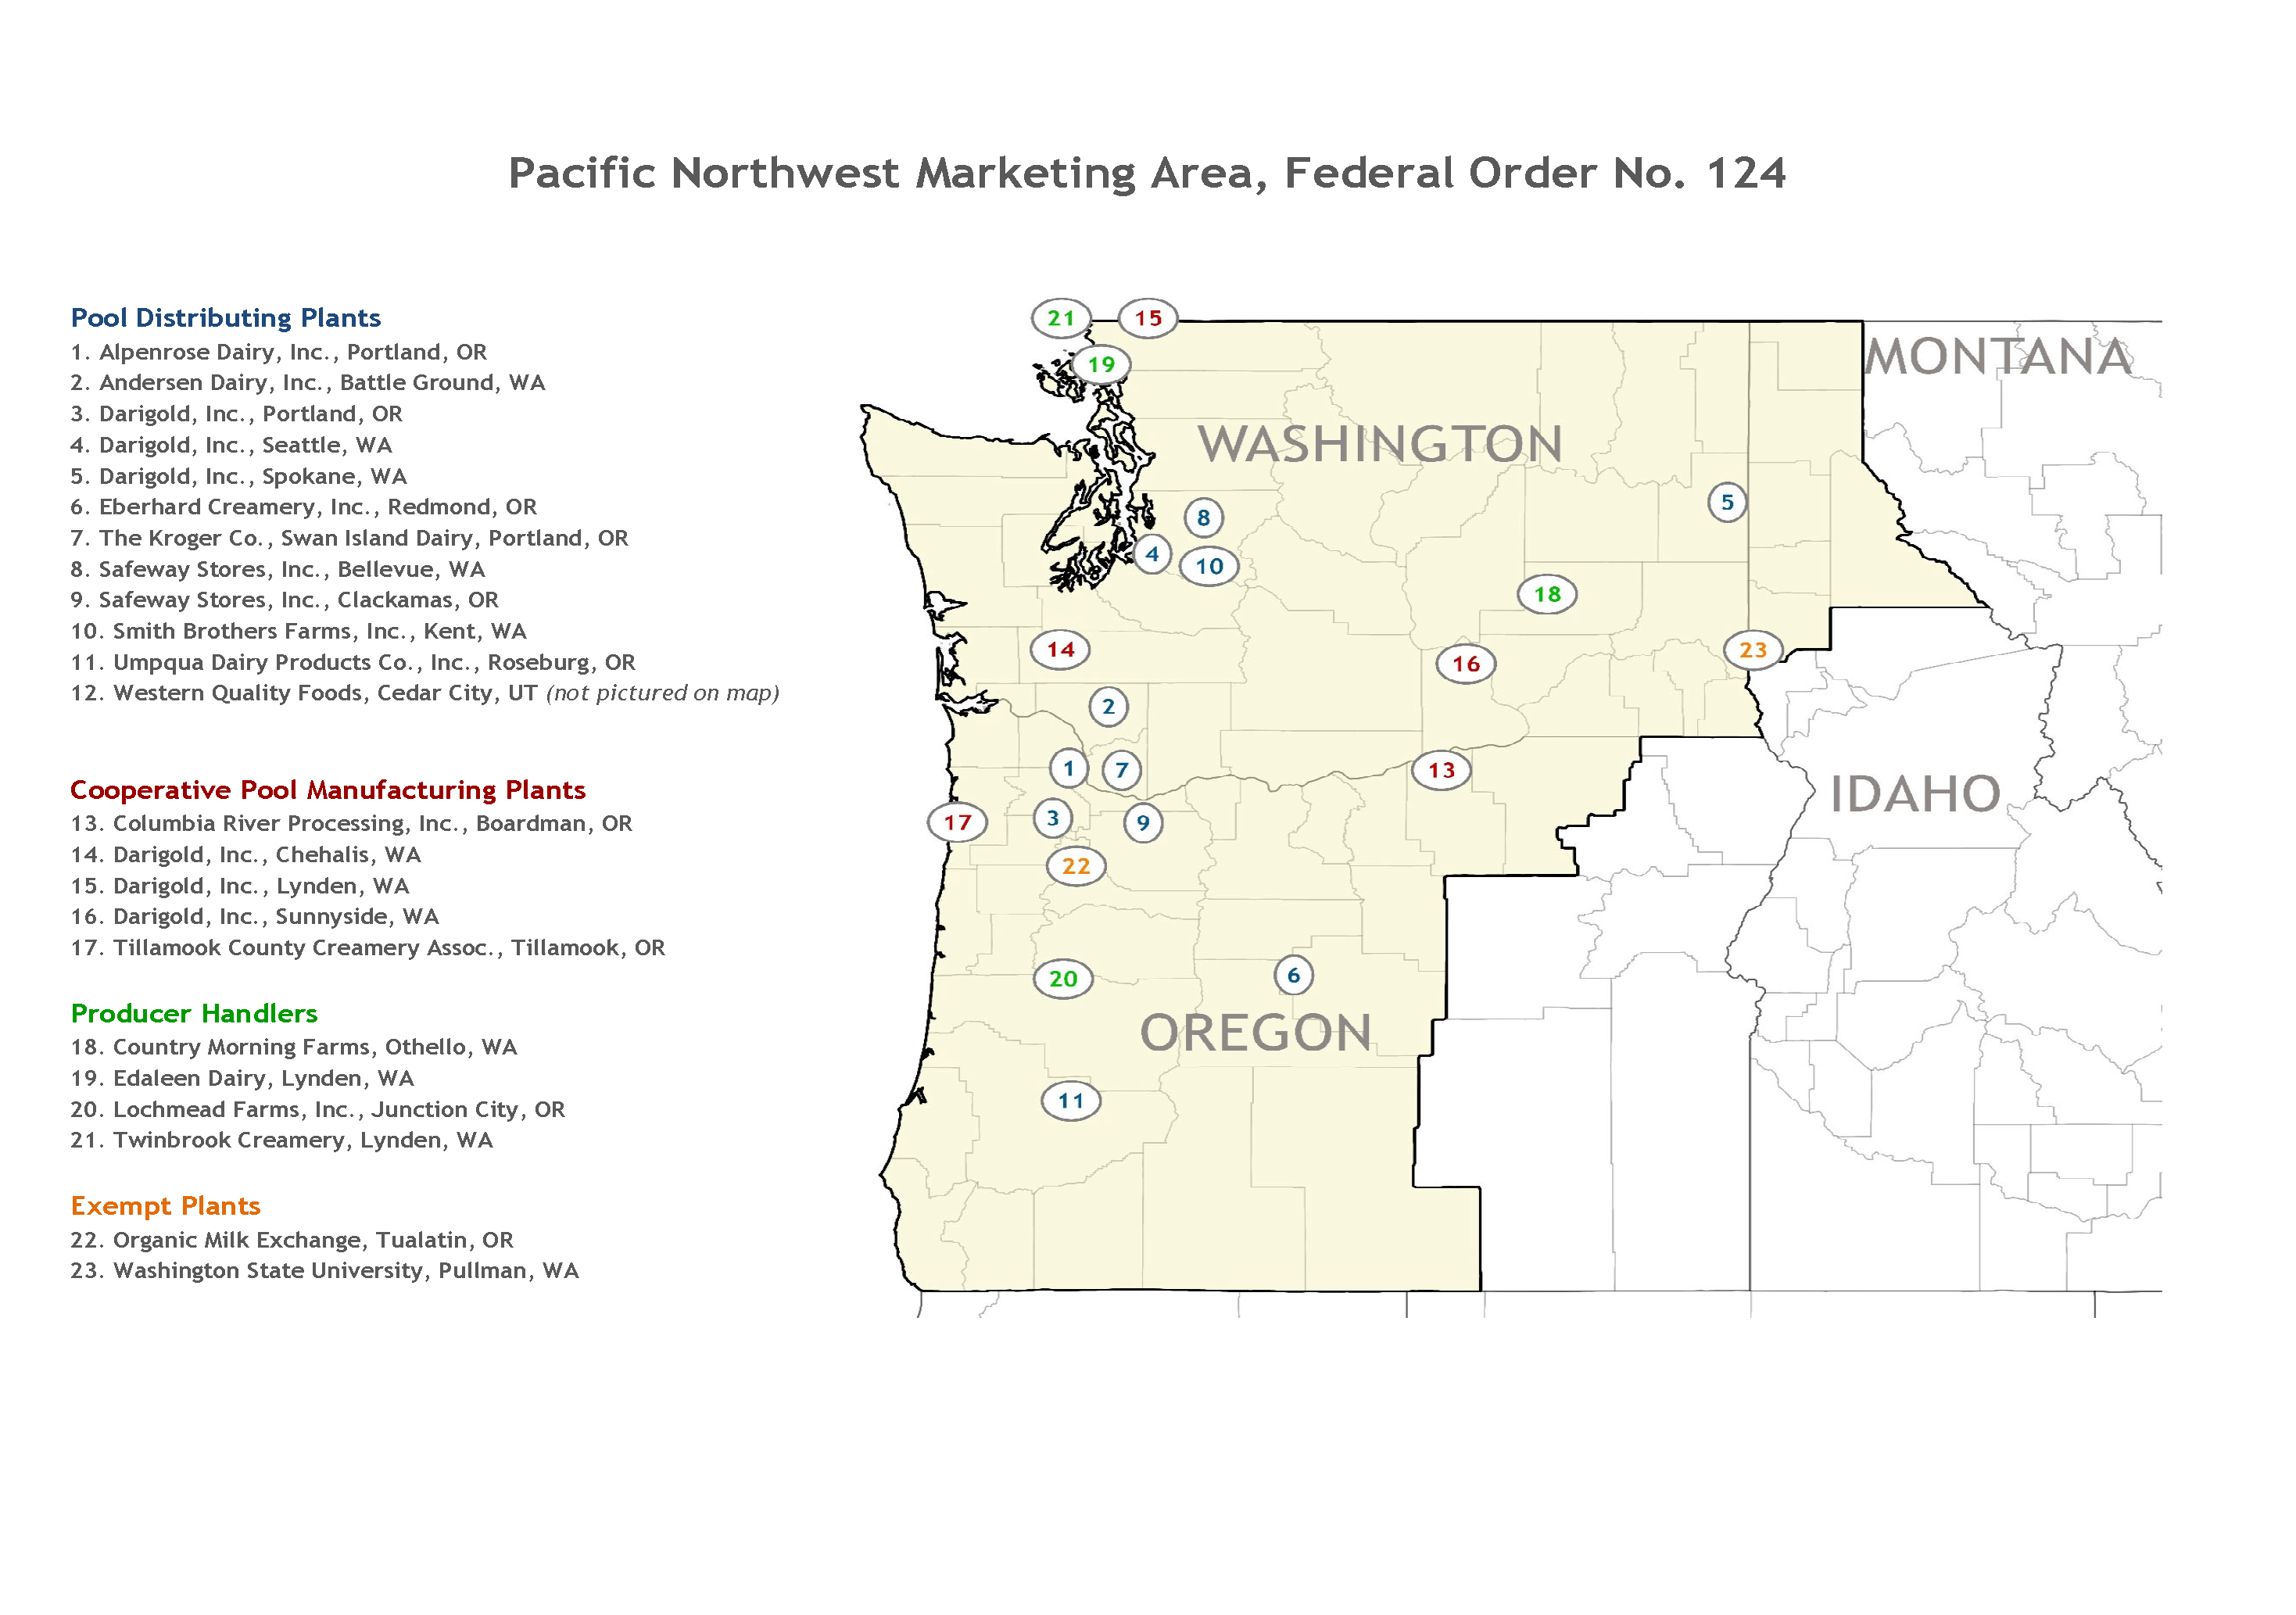 Pacific Northwest Plant Locations